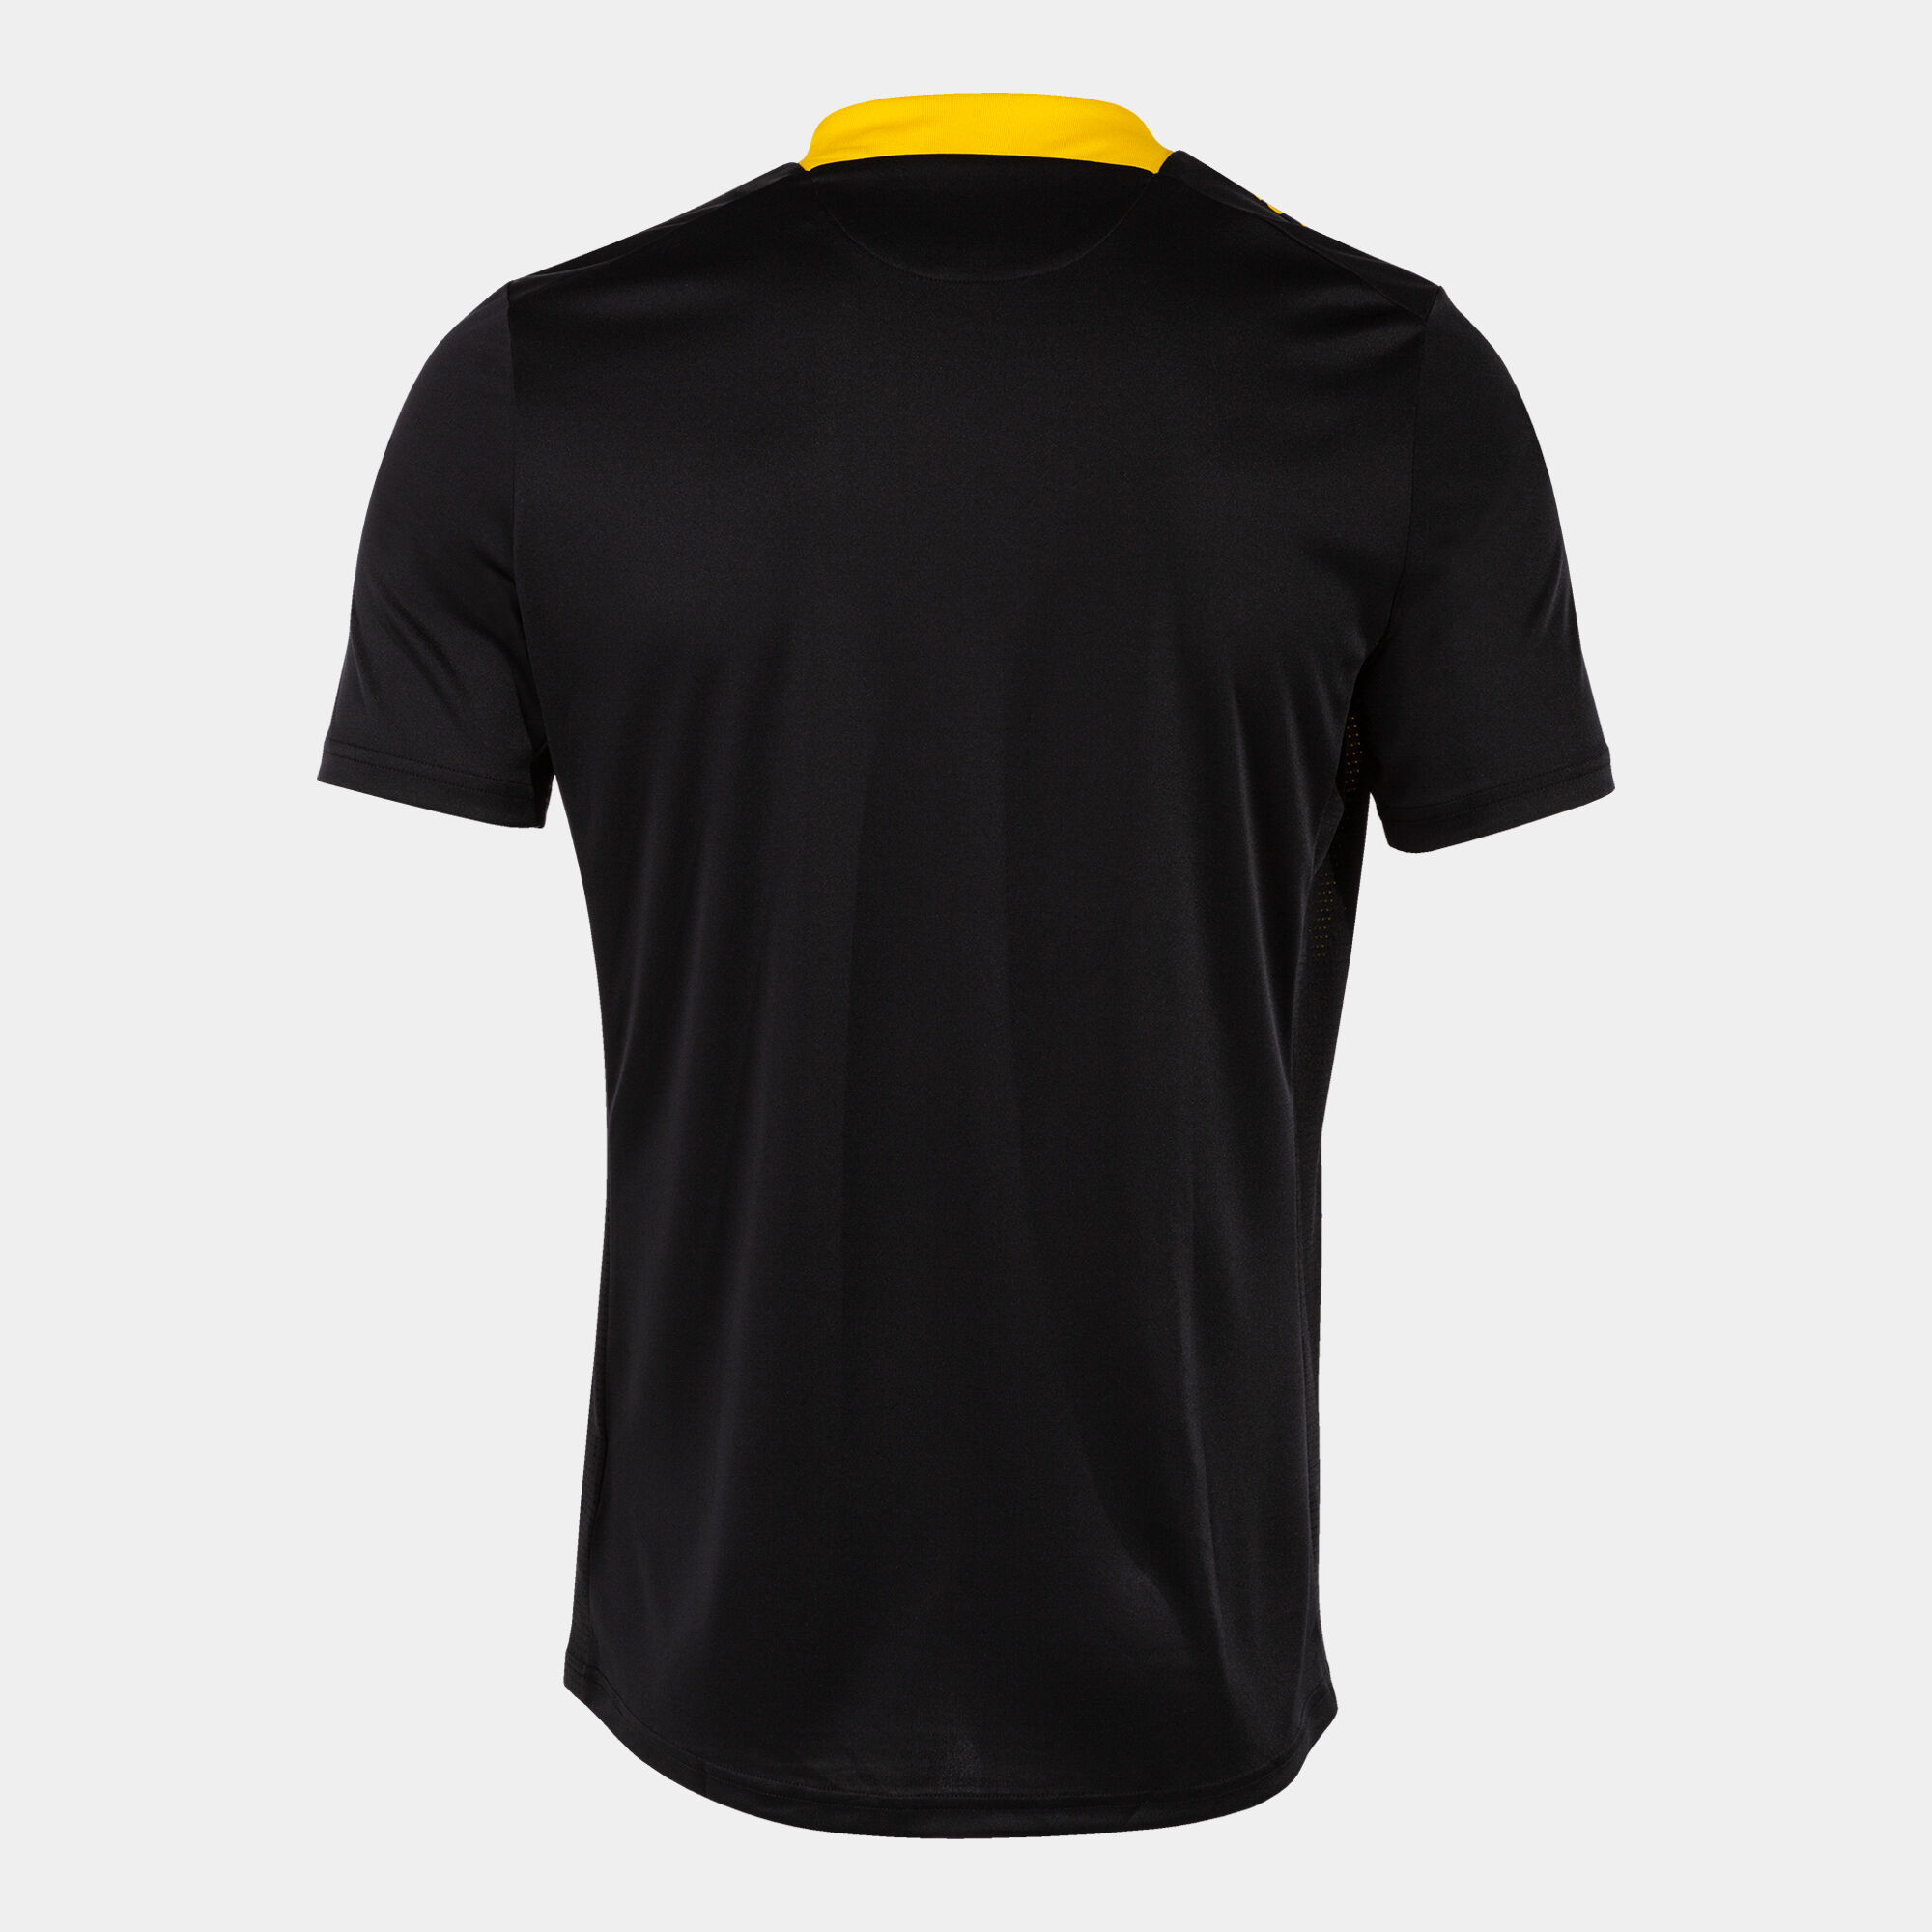 Camiseta manga corta hombre Flag III negro amarillo